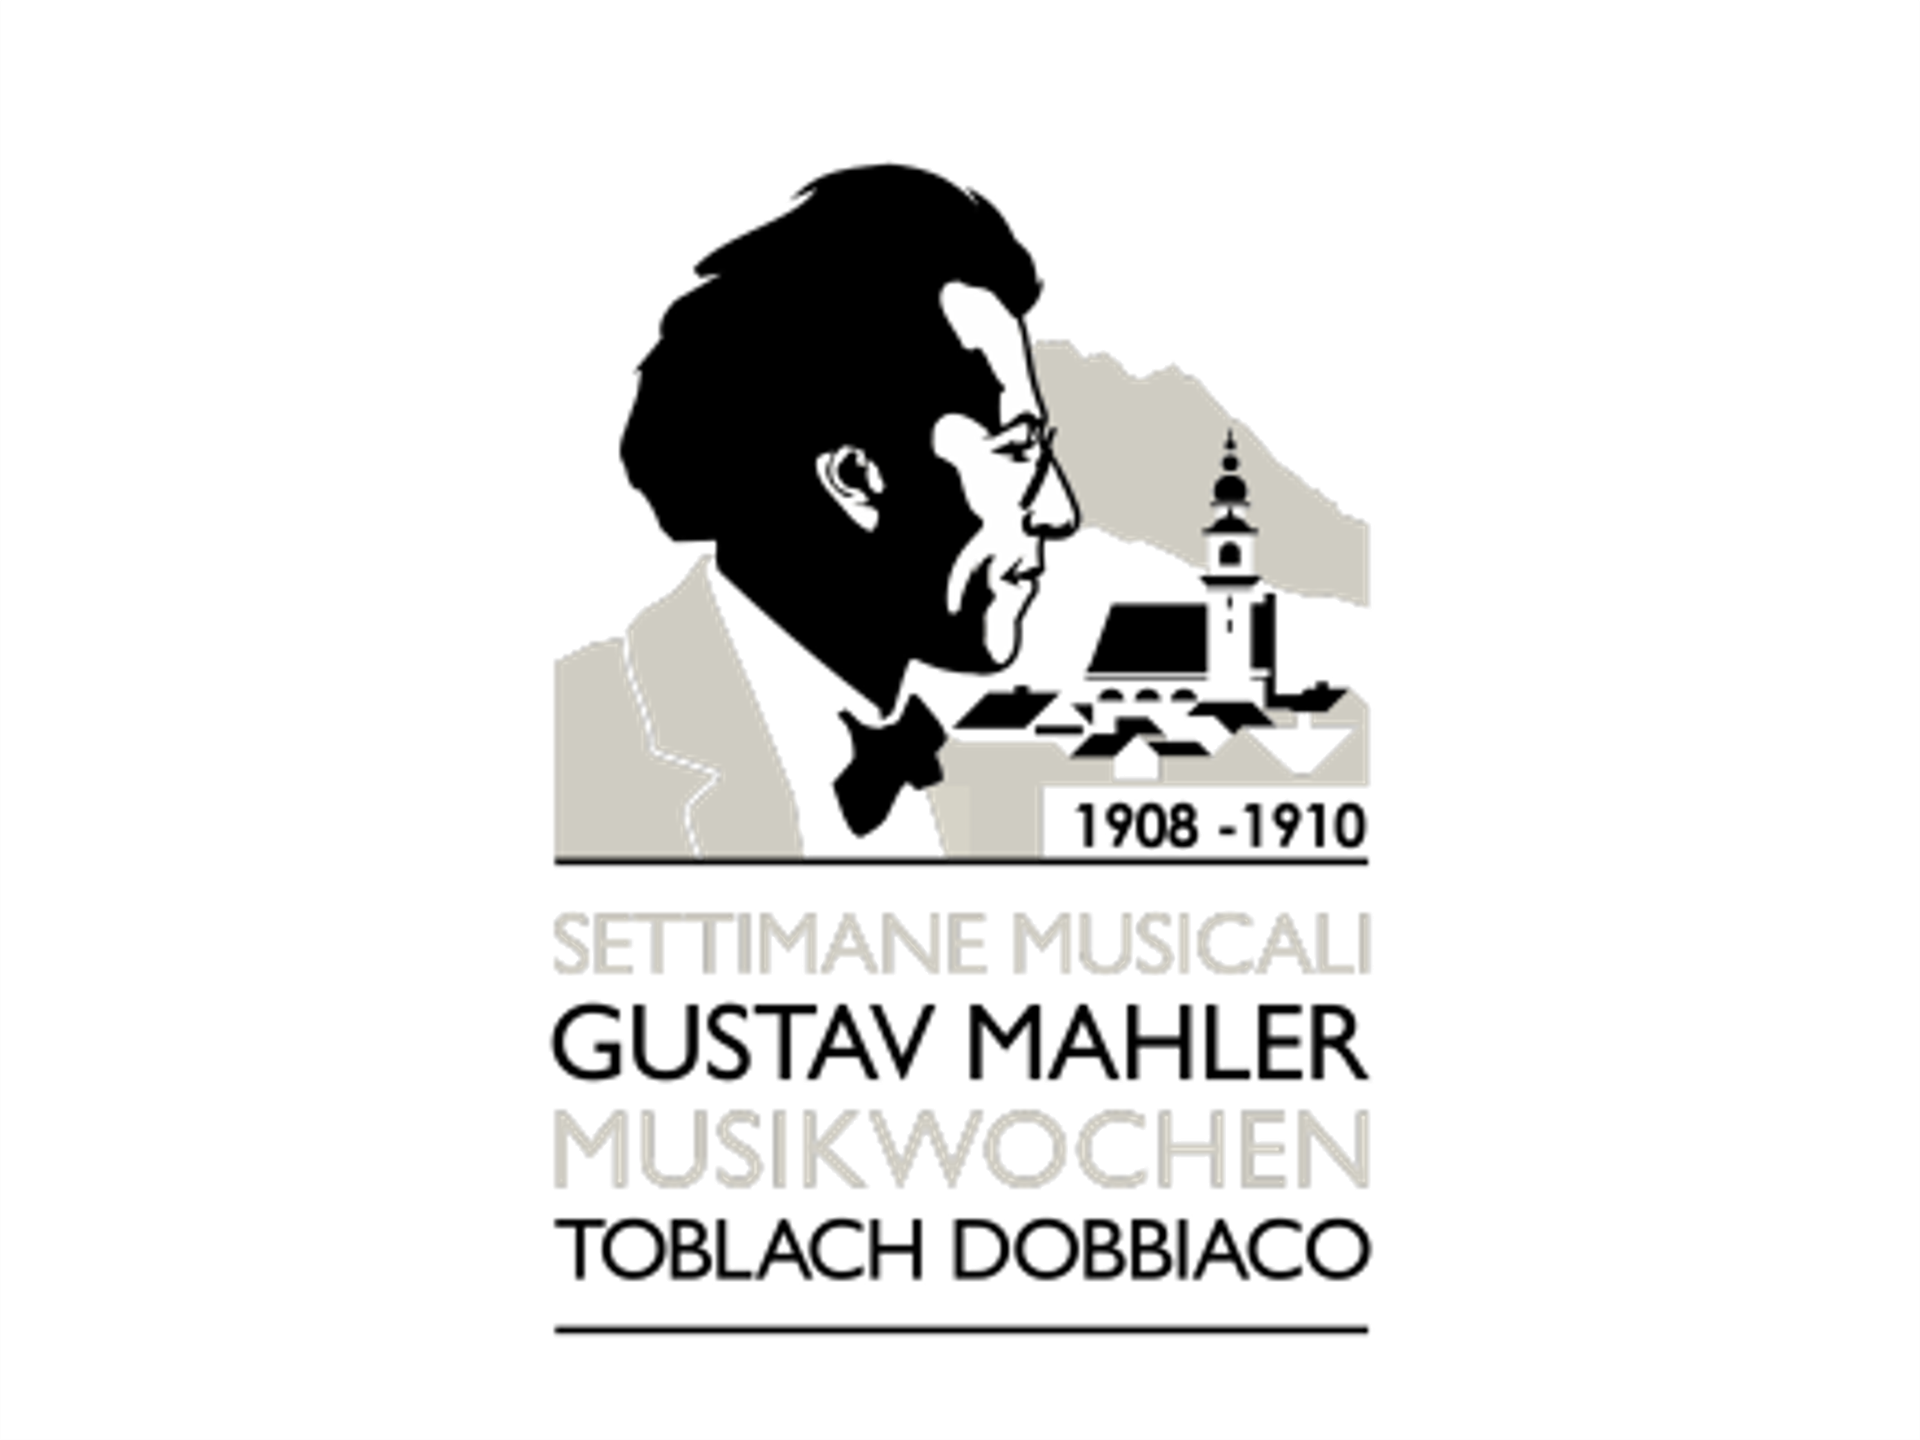 42. Settimane Musicali Gustav Mahler Dobbiaco